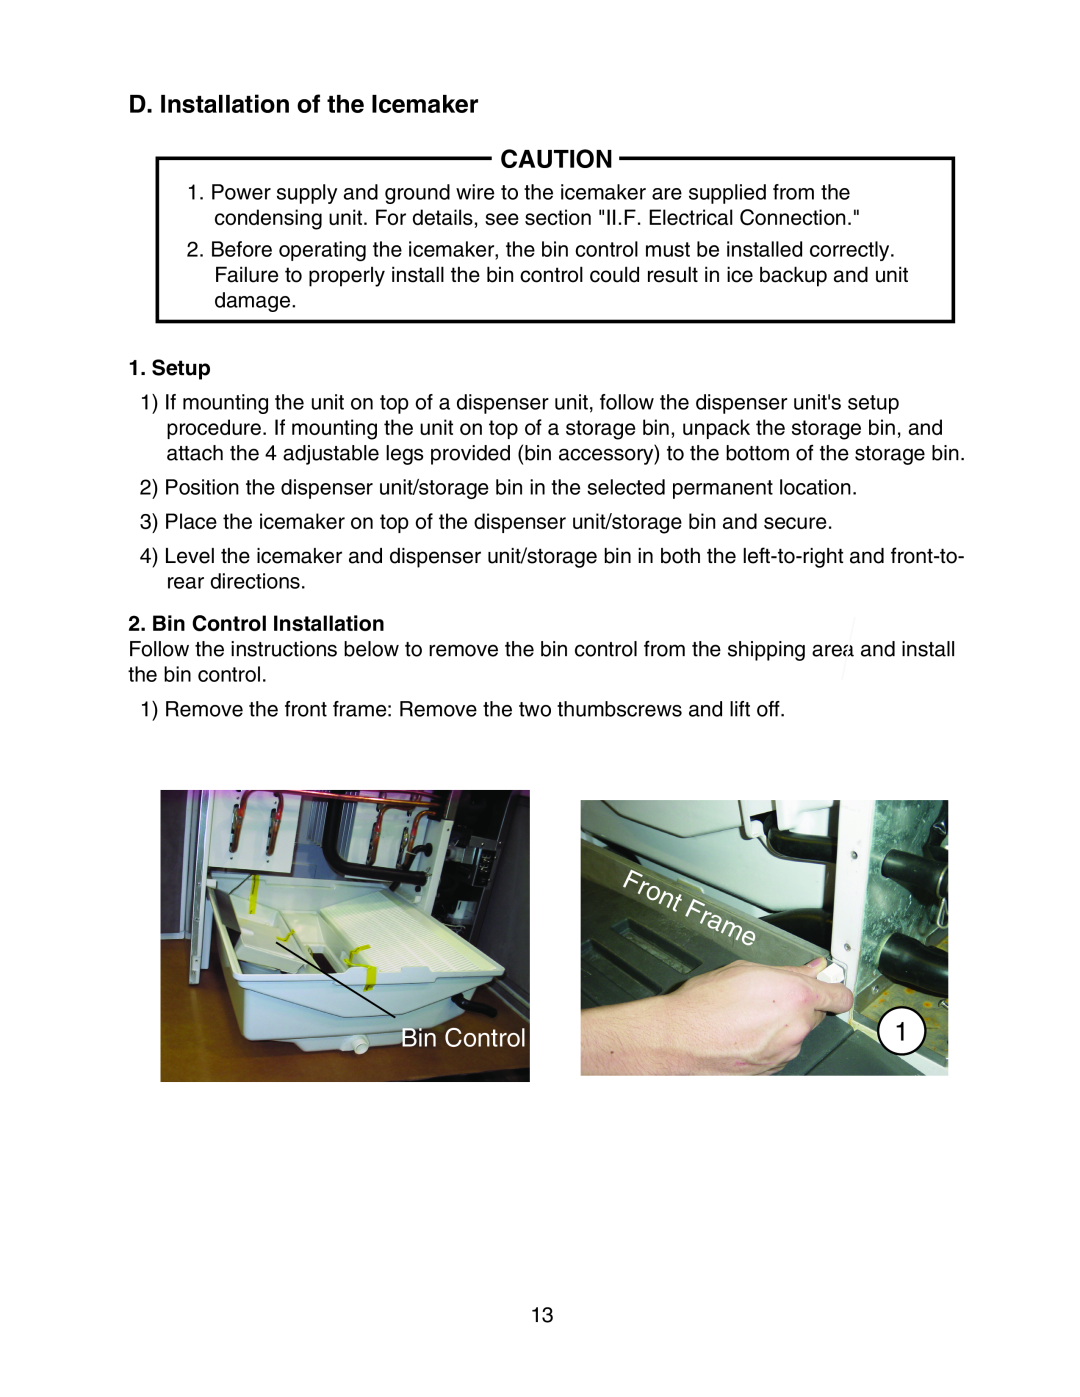 Hoshizaki KMS-1400MLH instruction manual D. Installation of the Icemaker, Setup, Bin Control Installation 